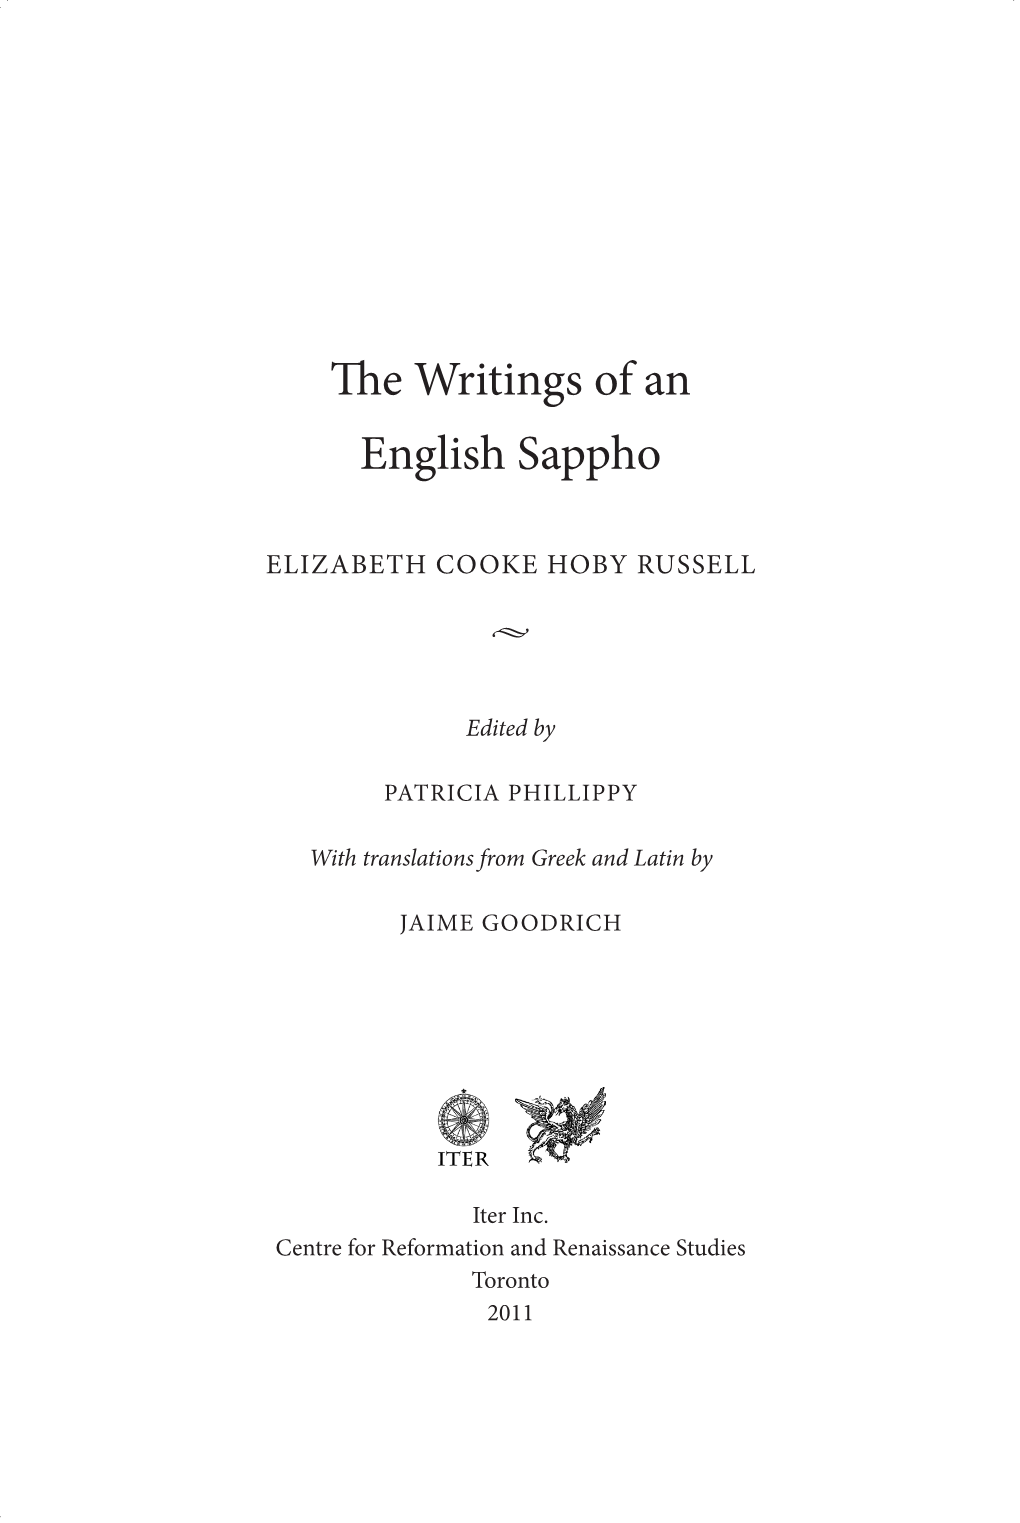 The Writings of an English Sappho